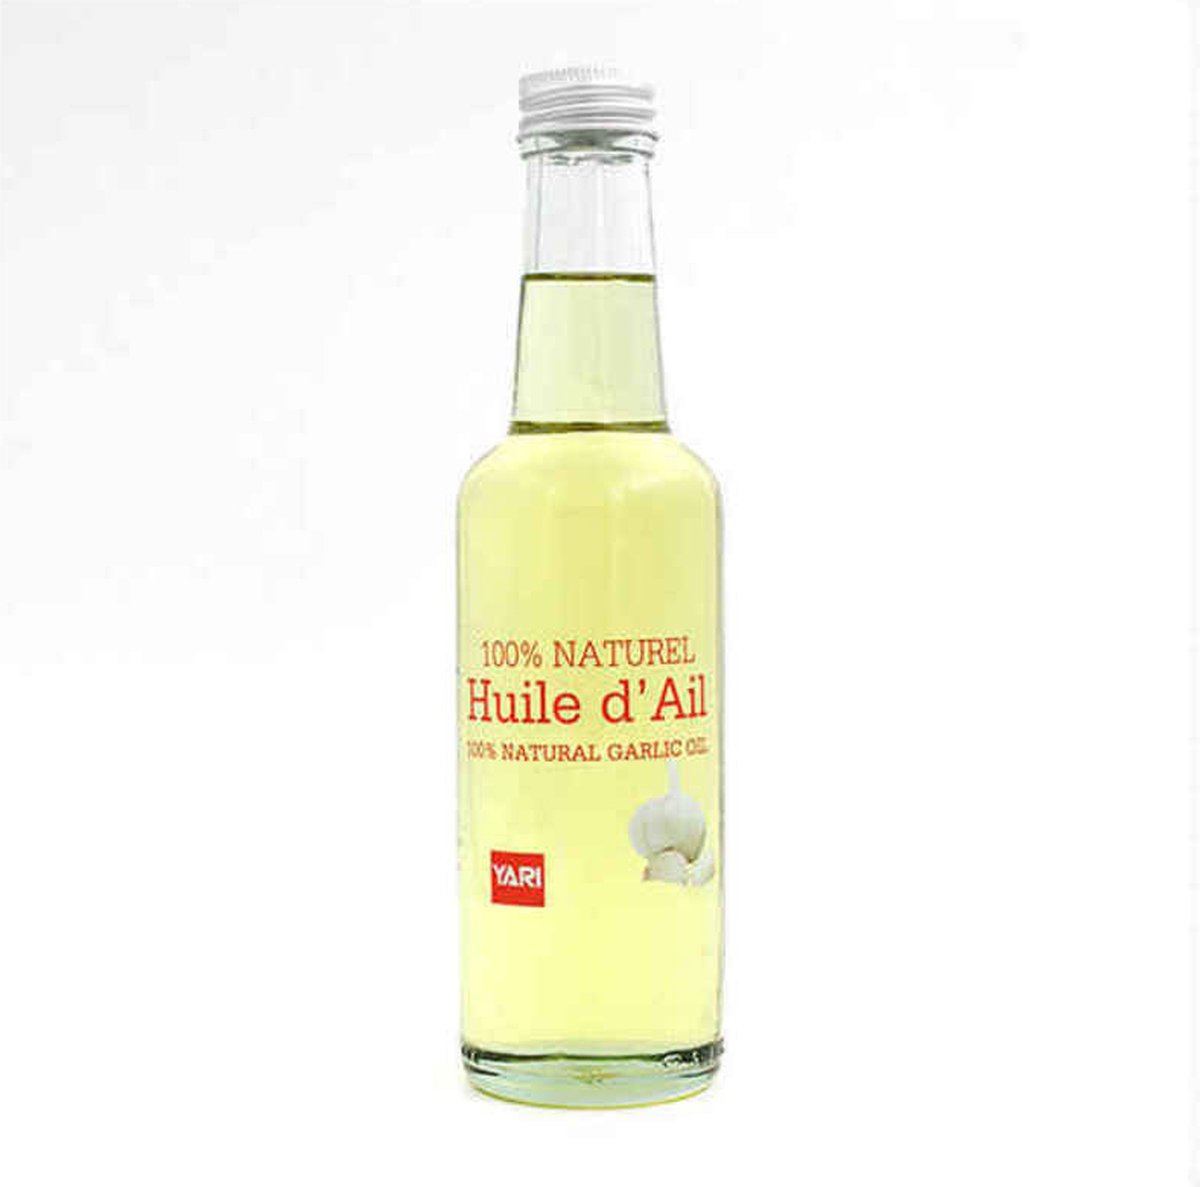 Yari 100% Natural Garlic Oil 250 ml